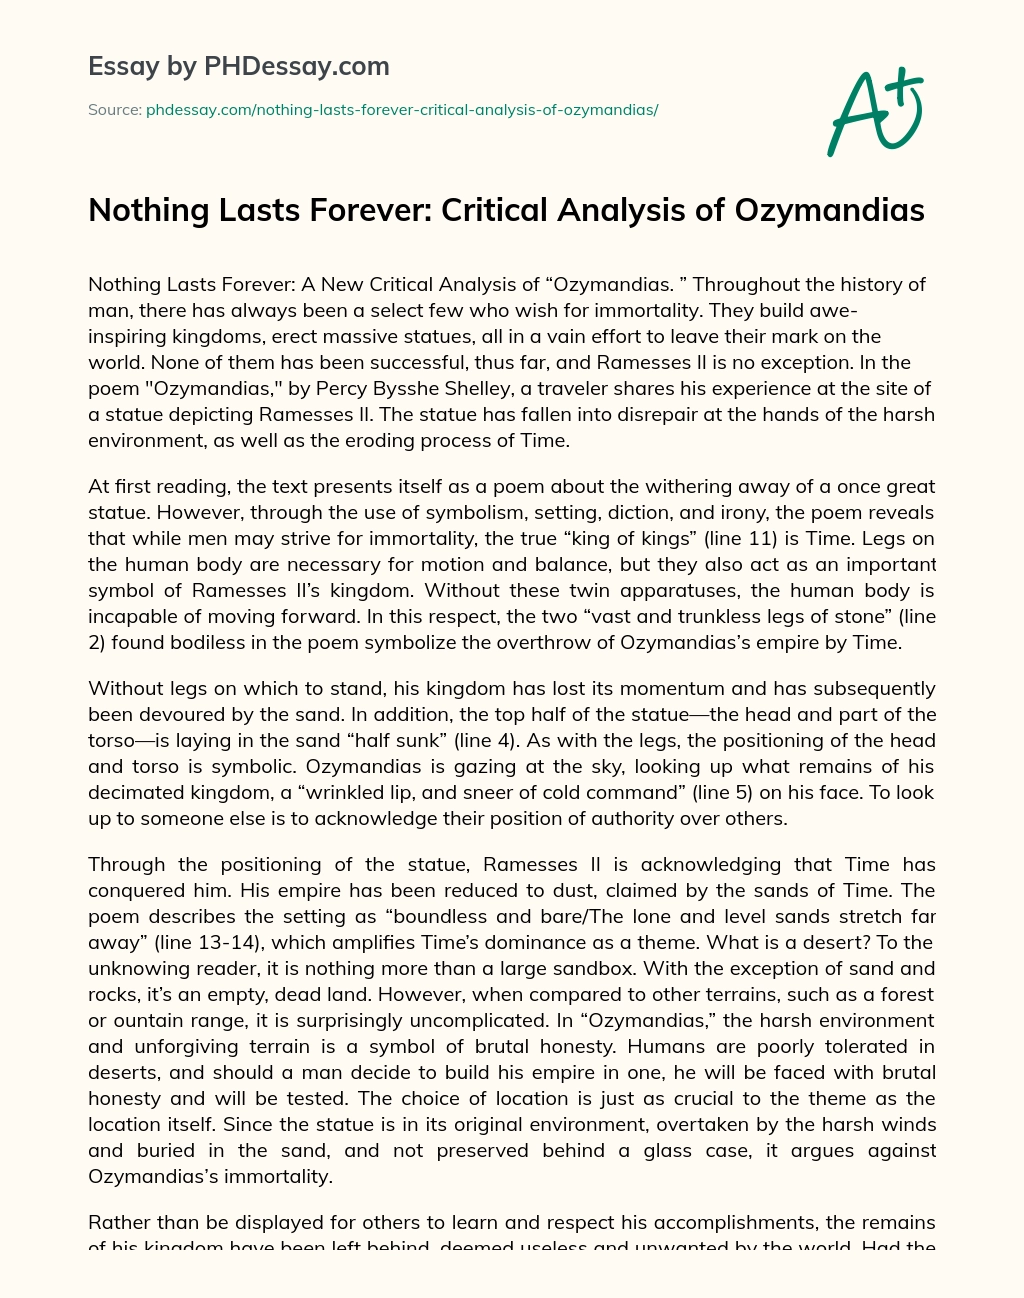 Nothing Lasts Forever: Critical Analysis of Ozymandias essay